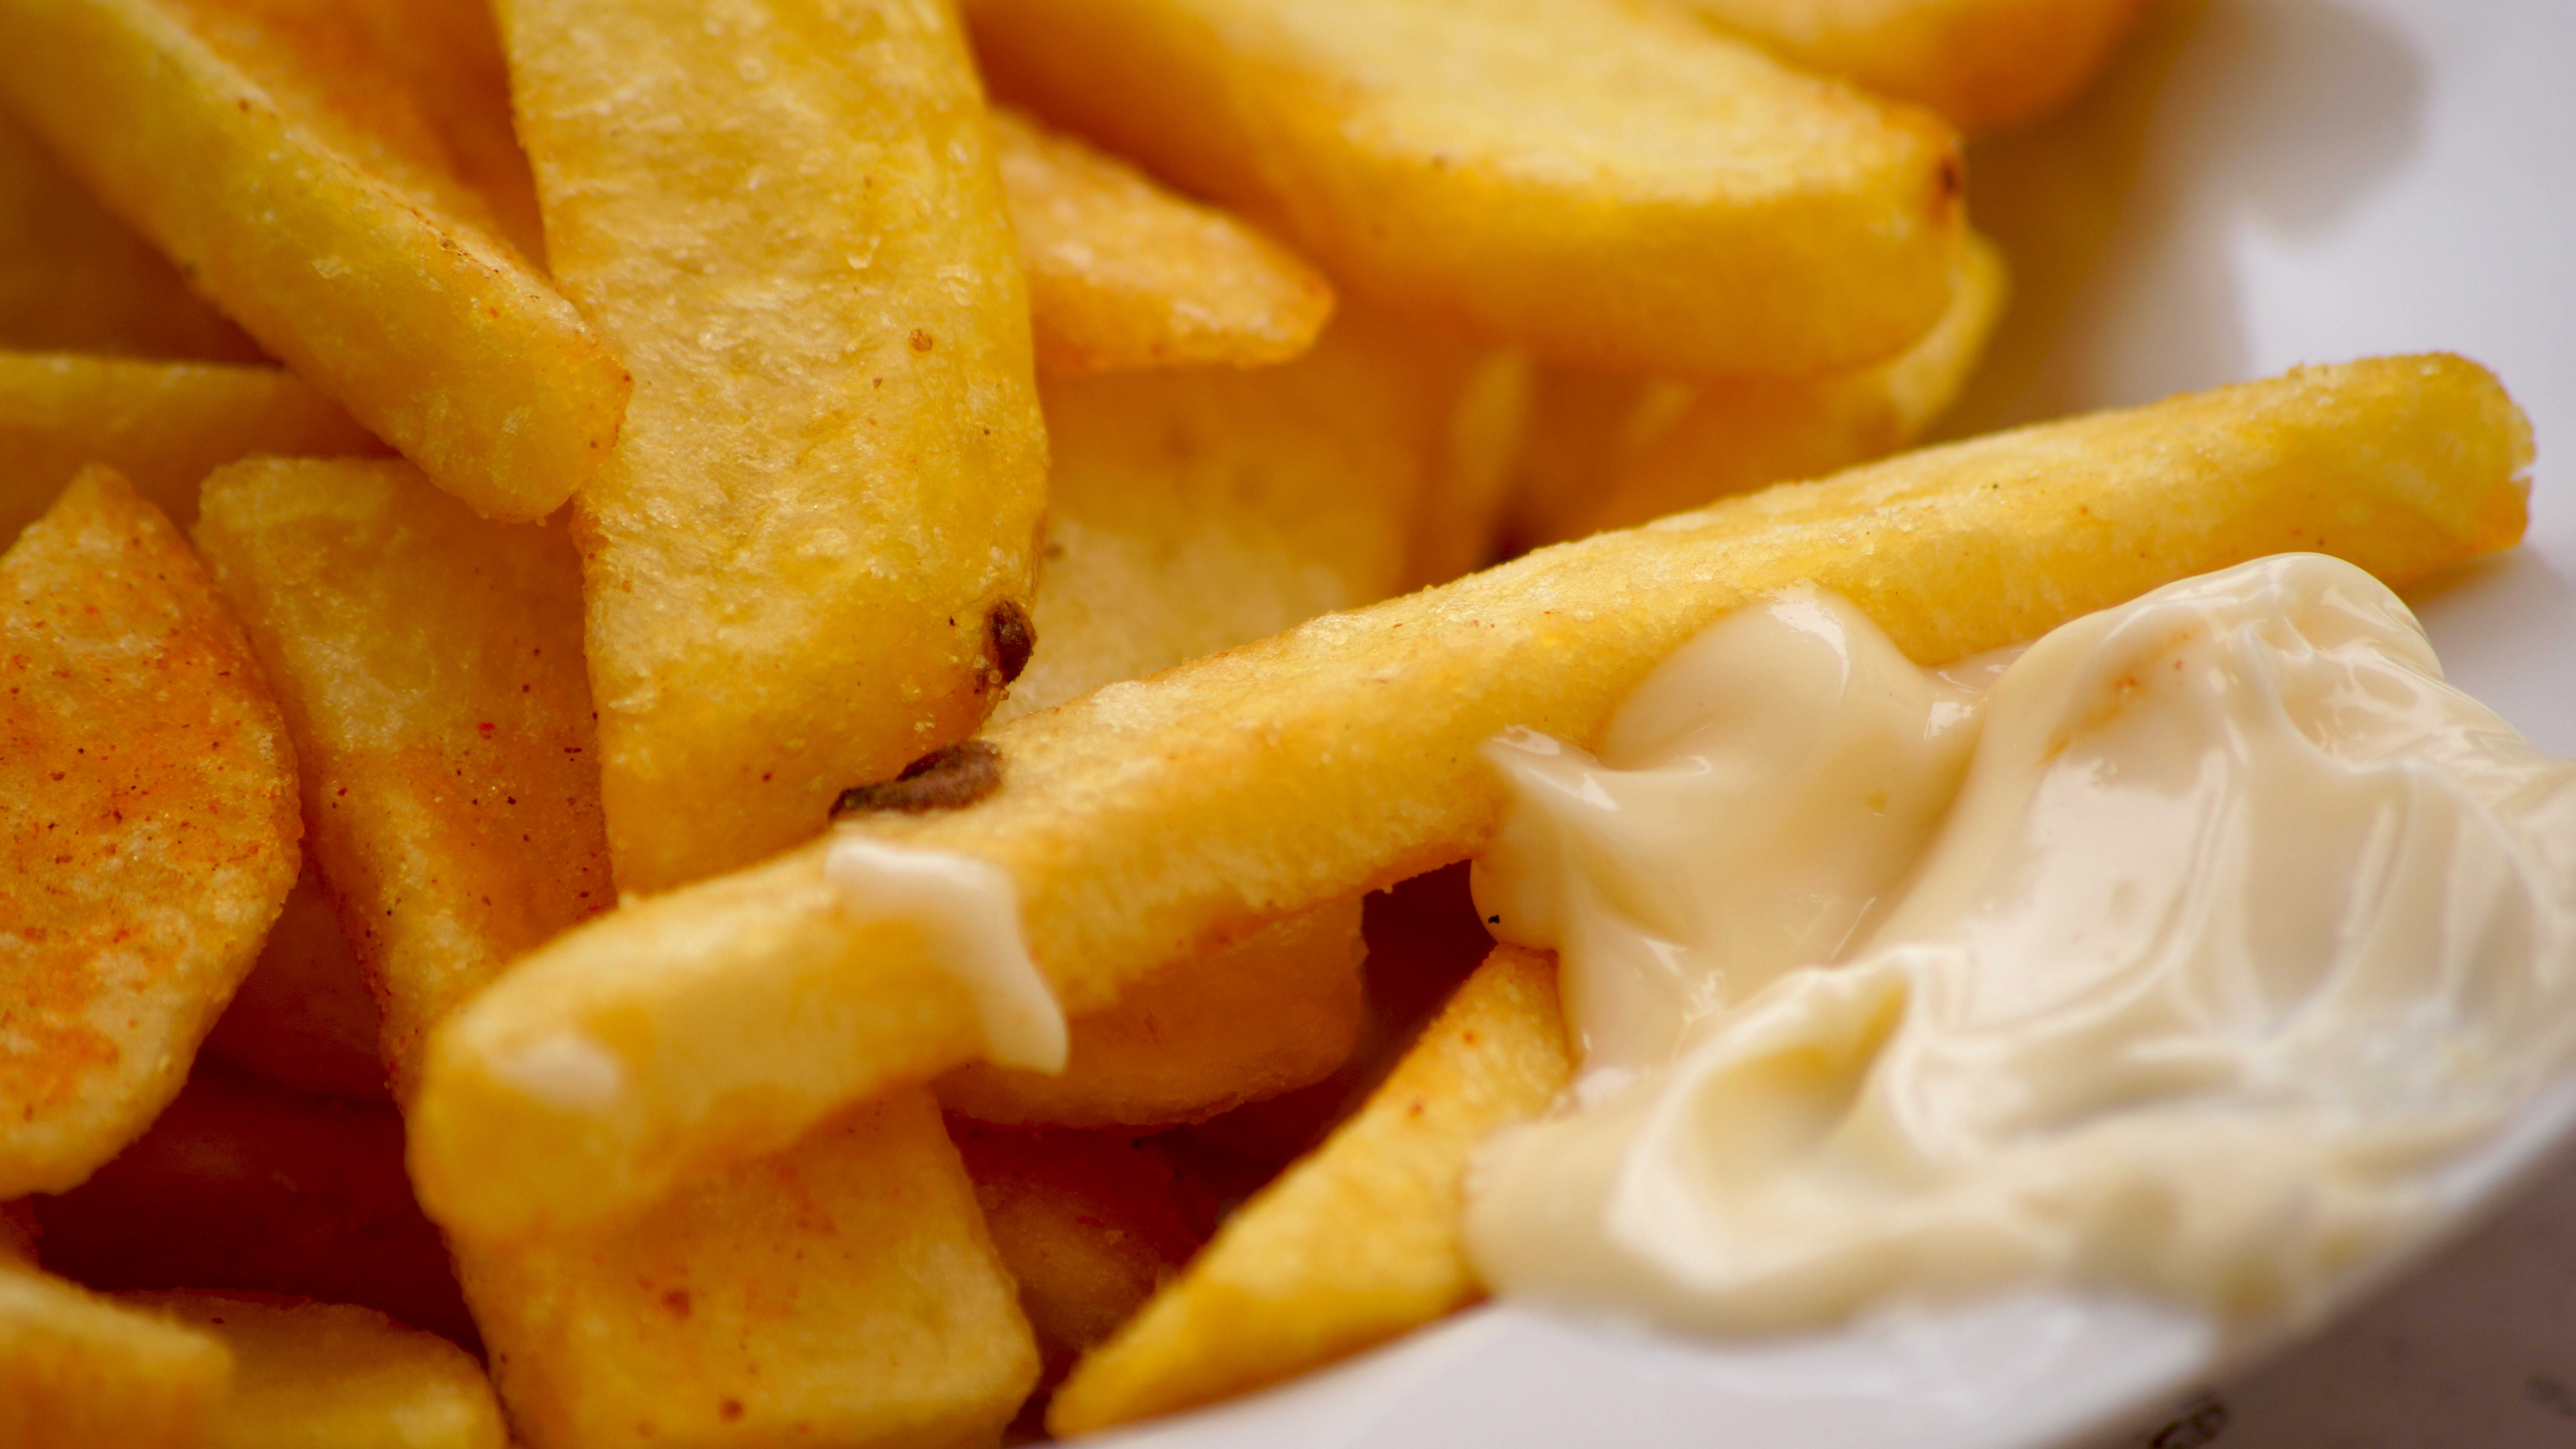 Belgians urged to eat fries twice a week as coronavirus creates massive potato surplus - CNBC